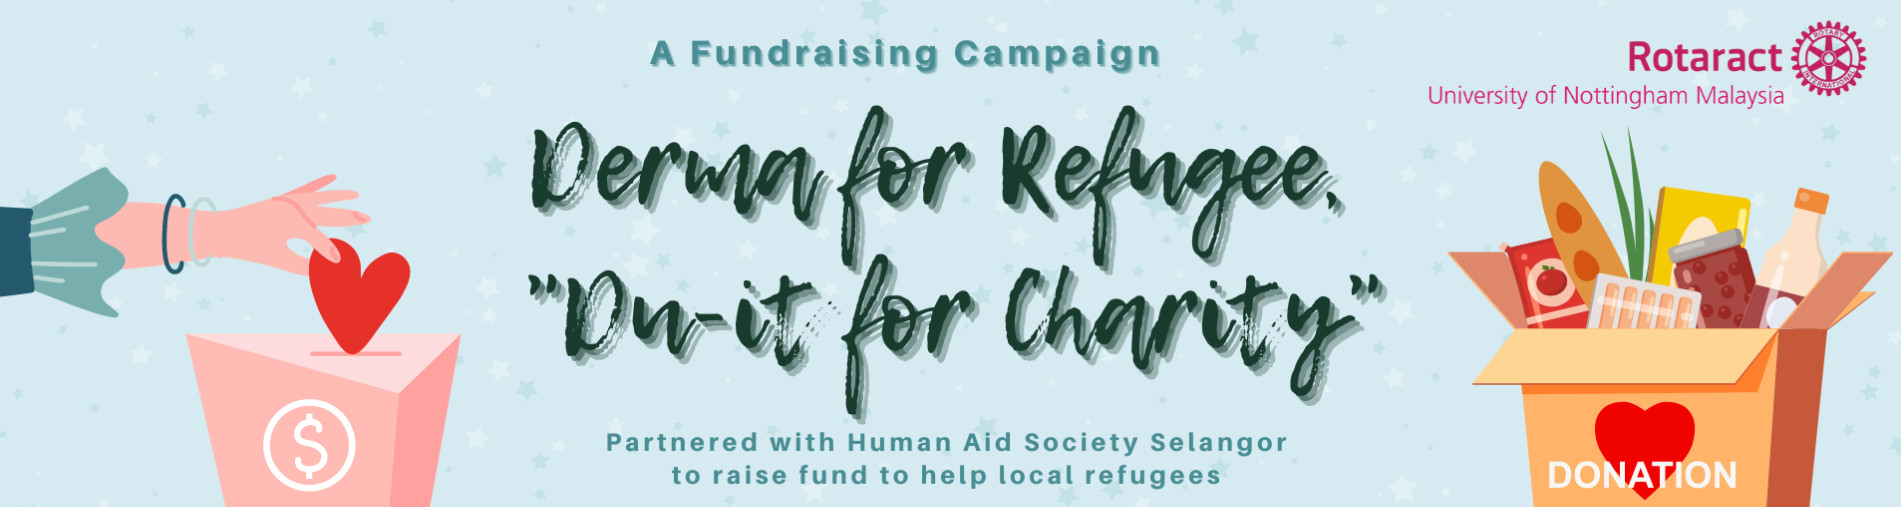 Derma For Refugee, "Du-it For Charity"